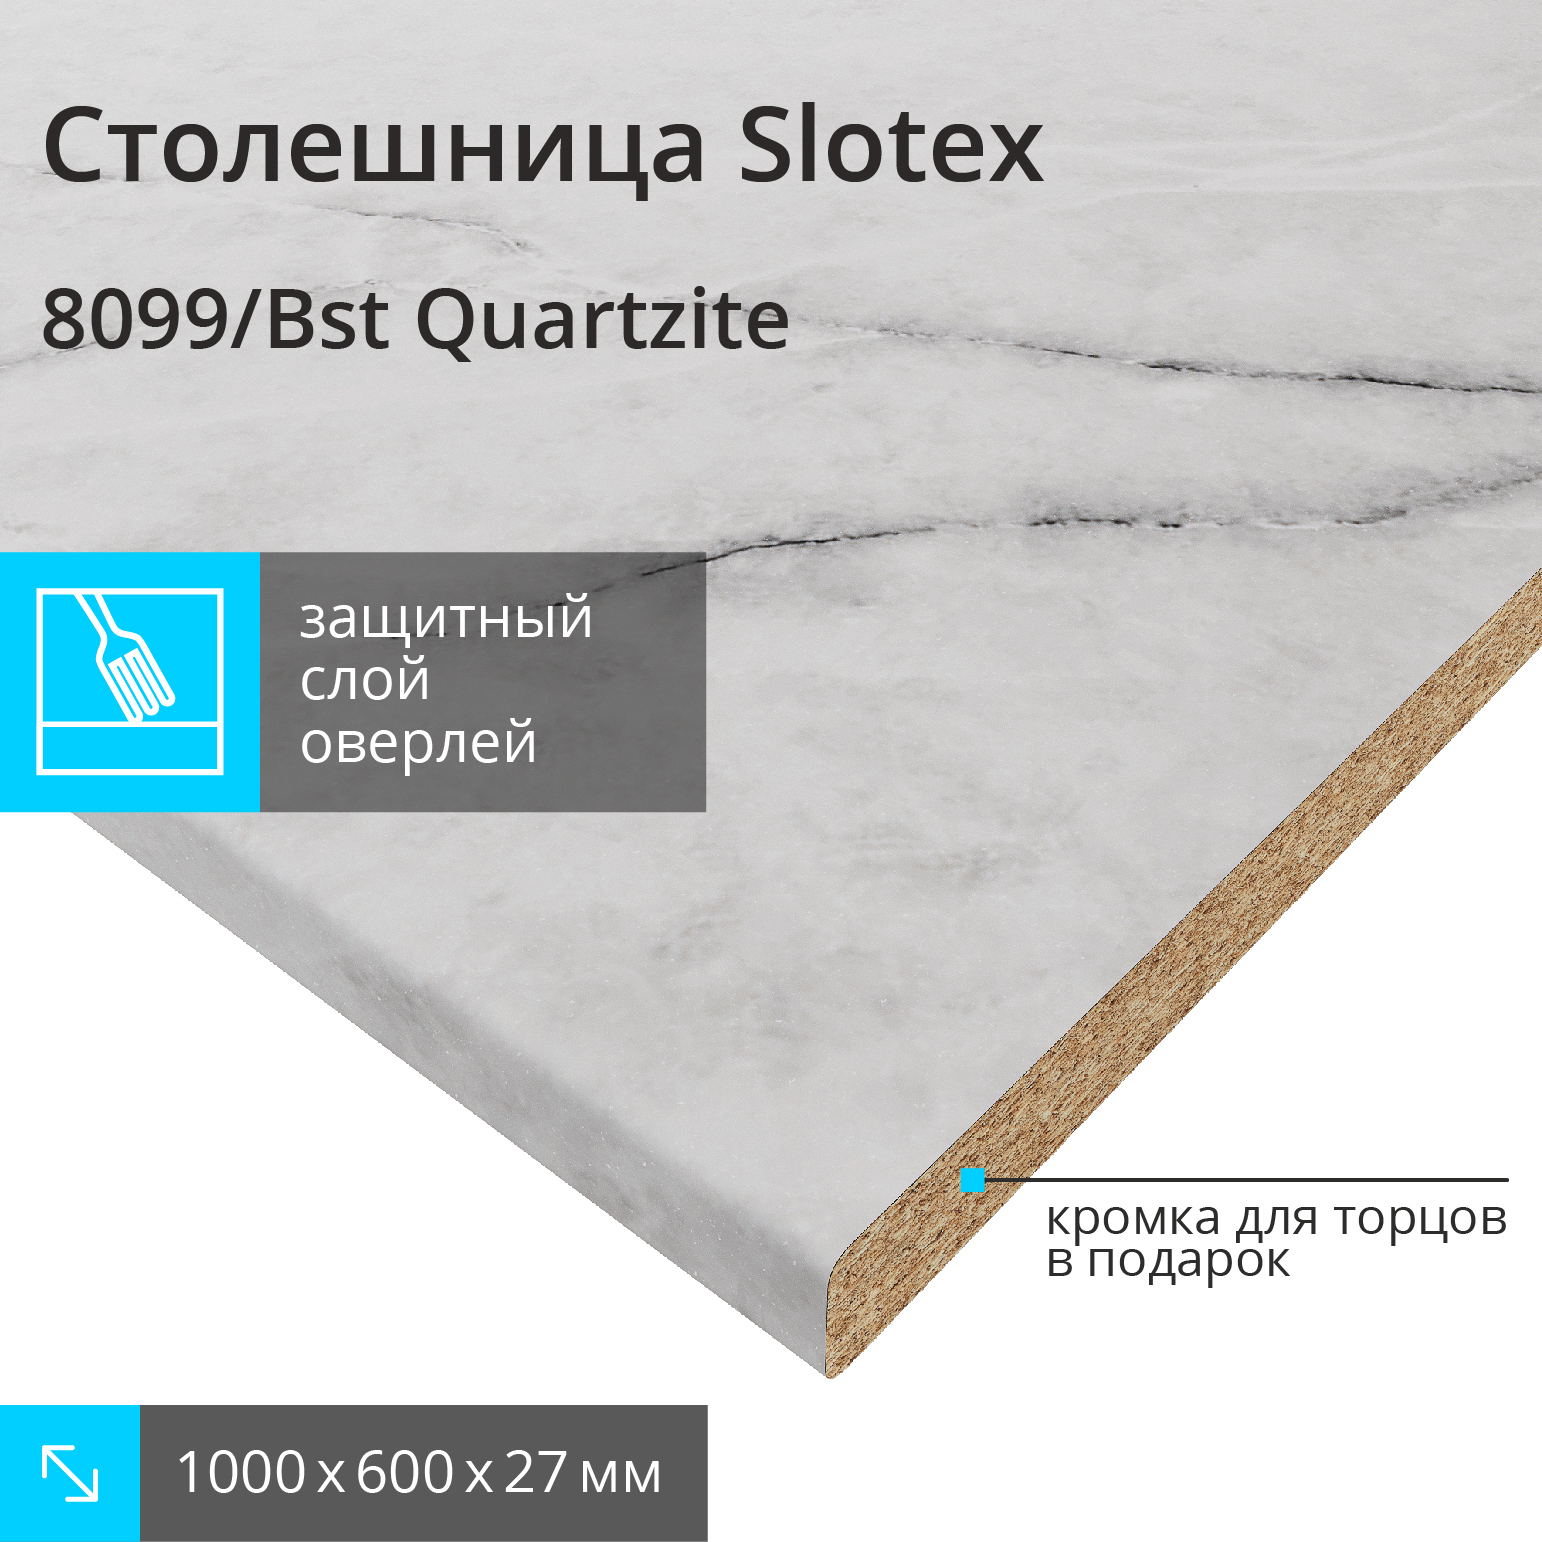 Слотекс 8099/BST Quartzite